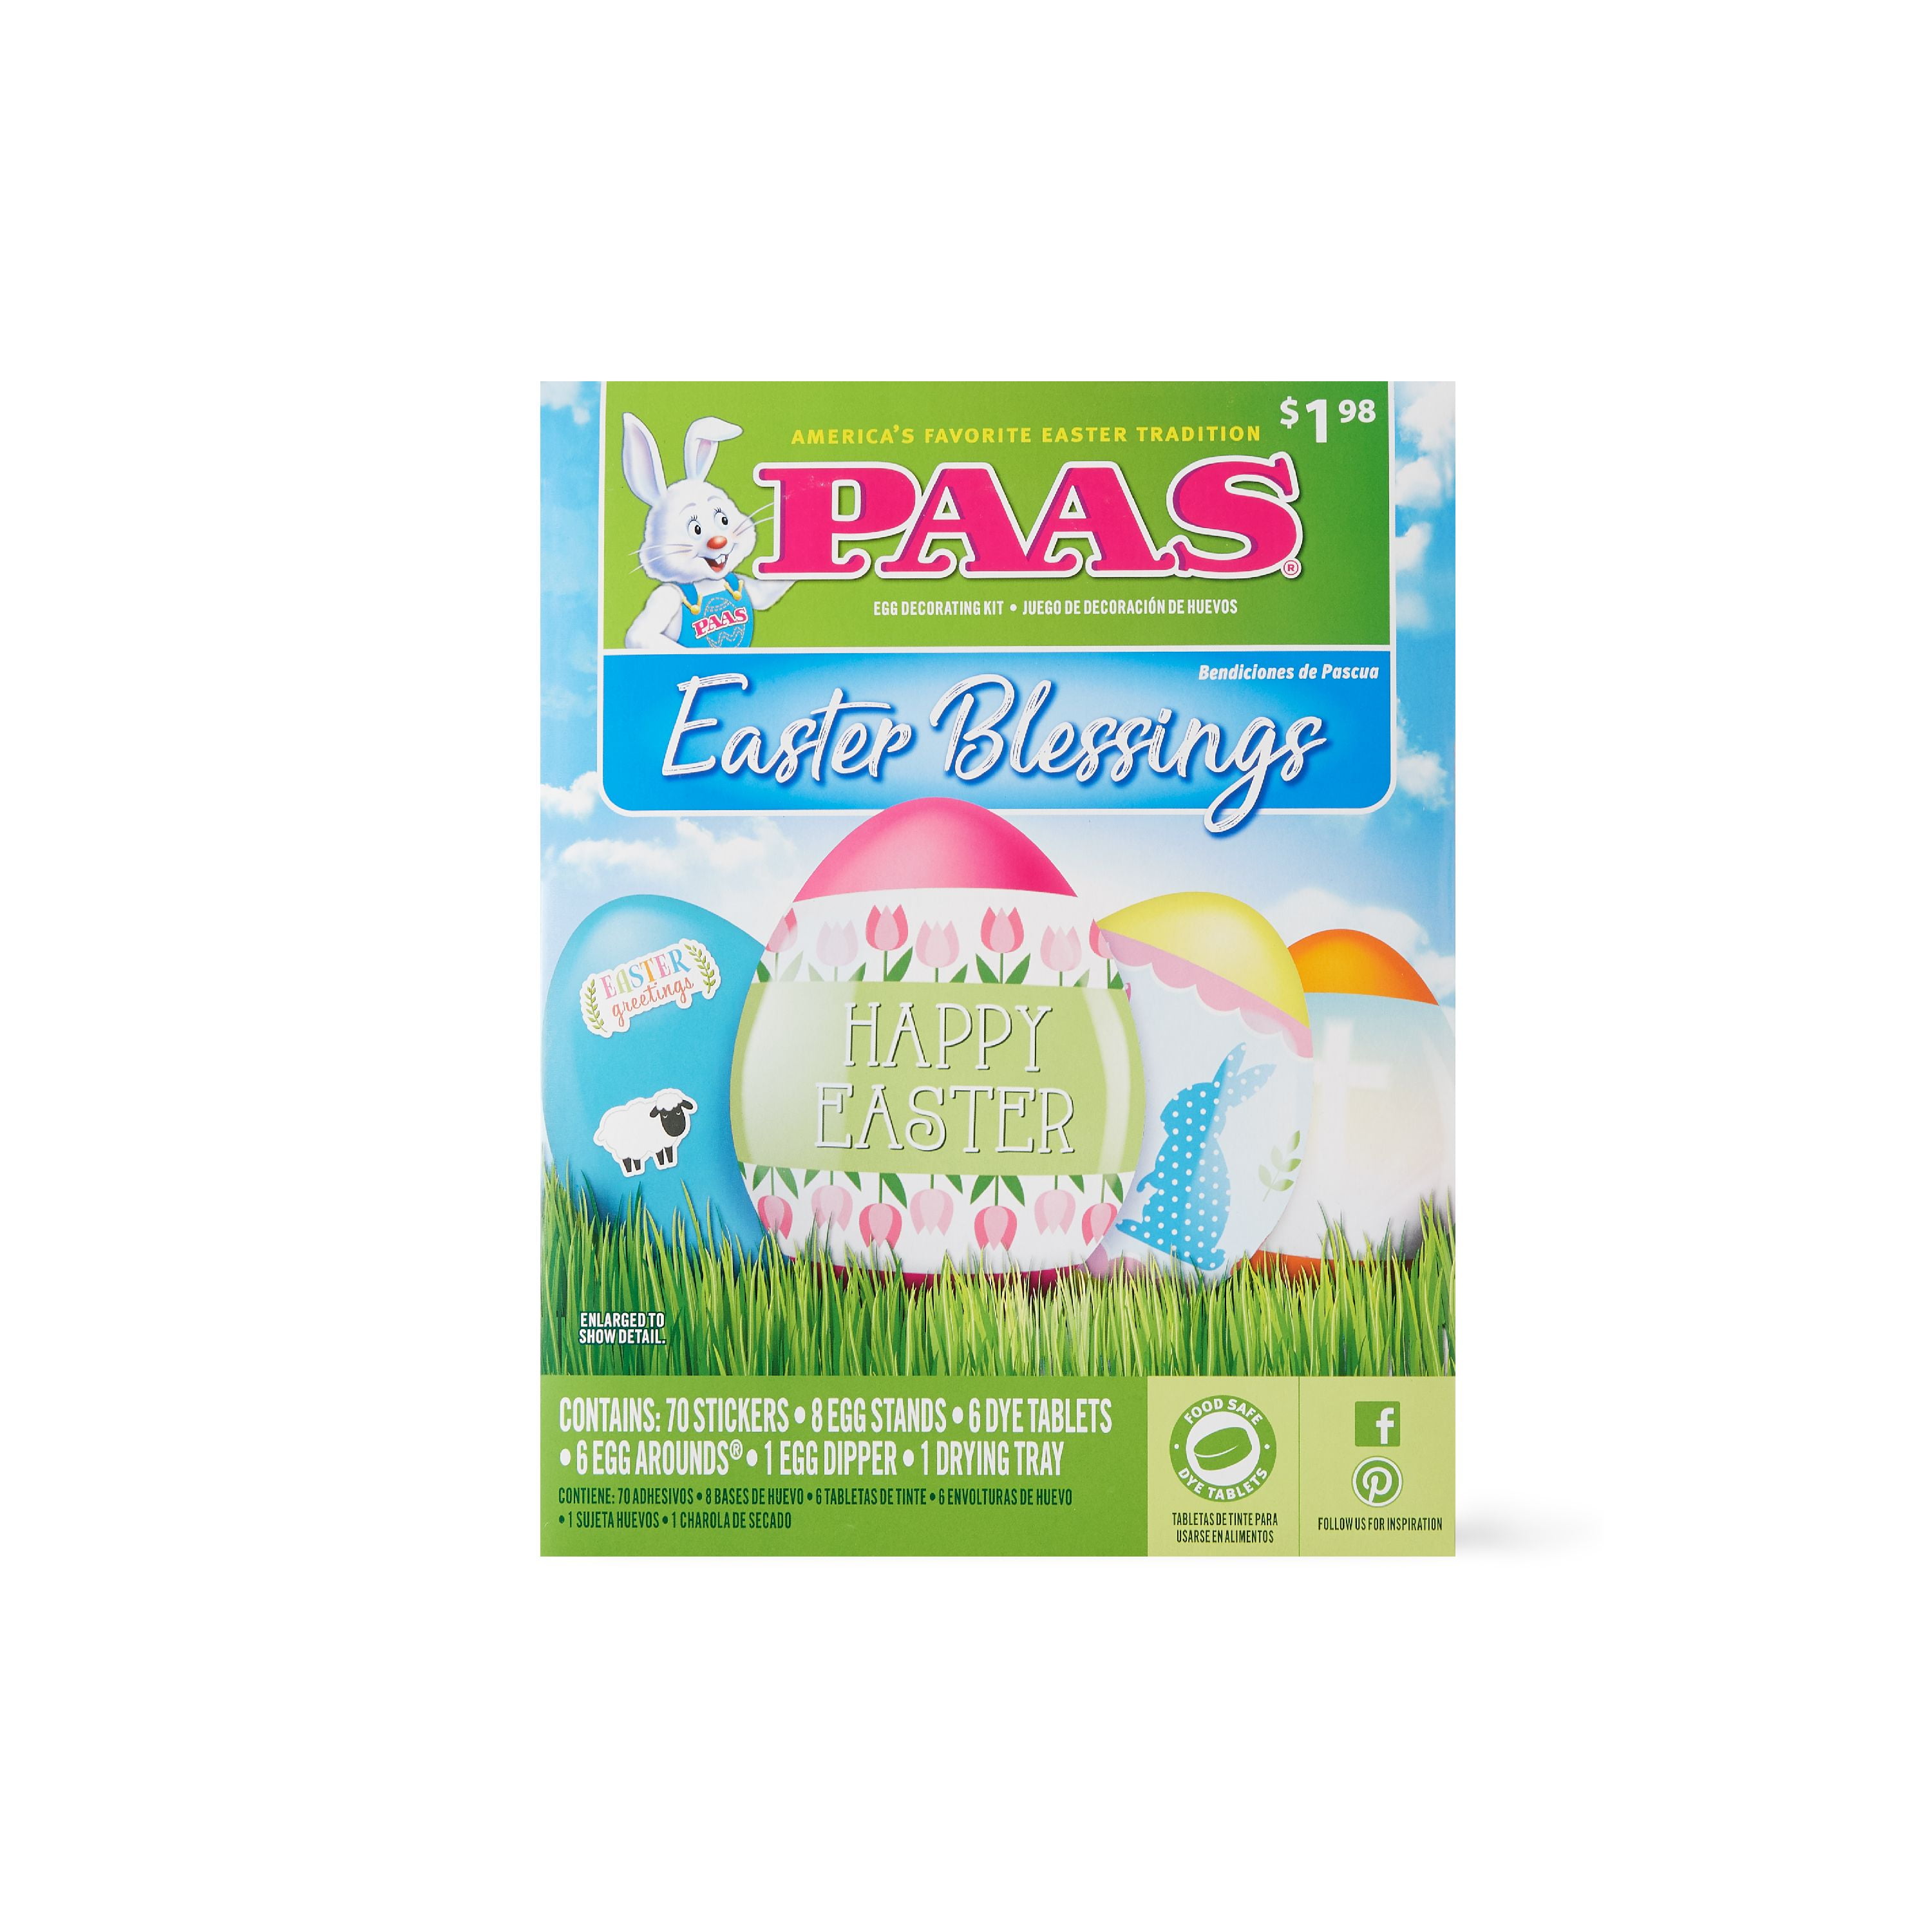 Egg decorating kit paas easter story kit new for  kids children free shipping 